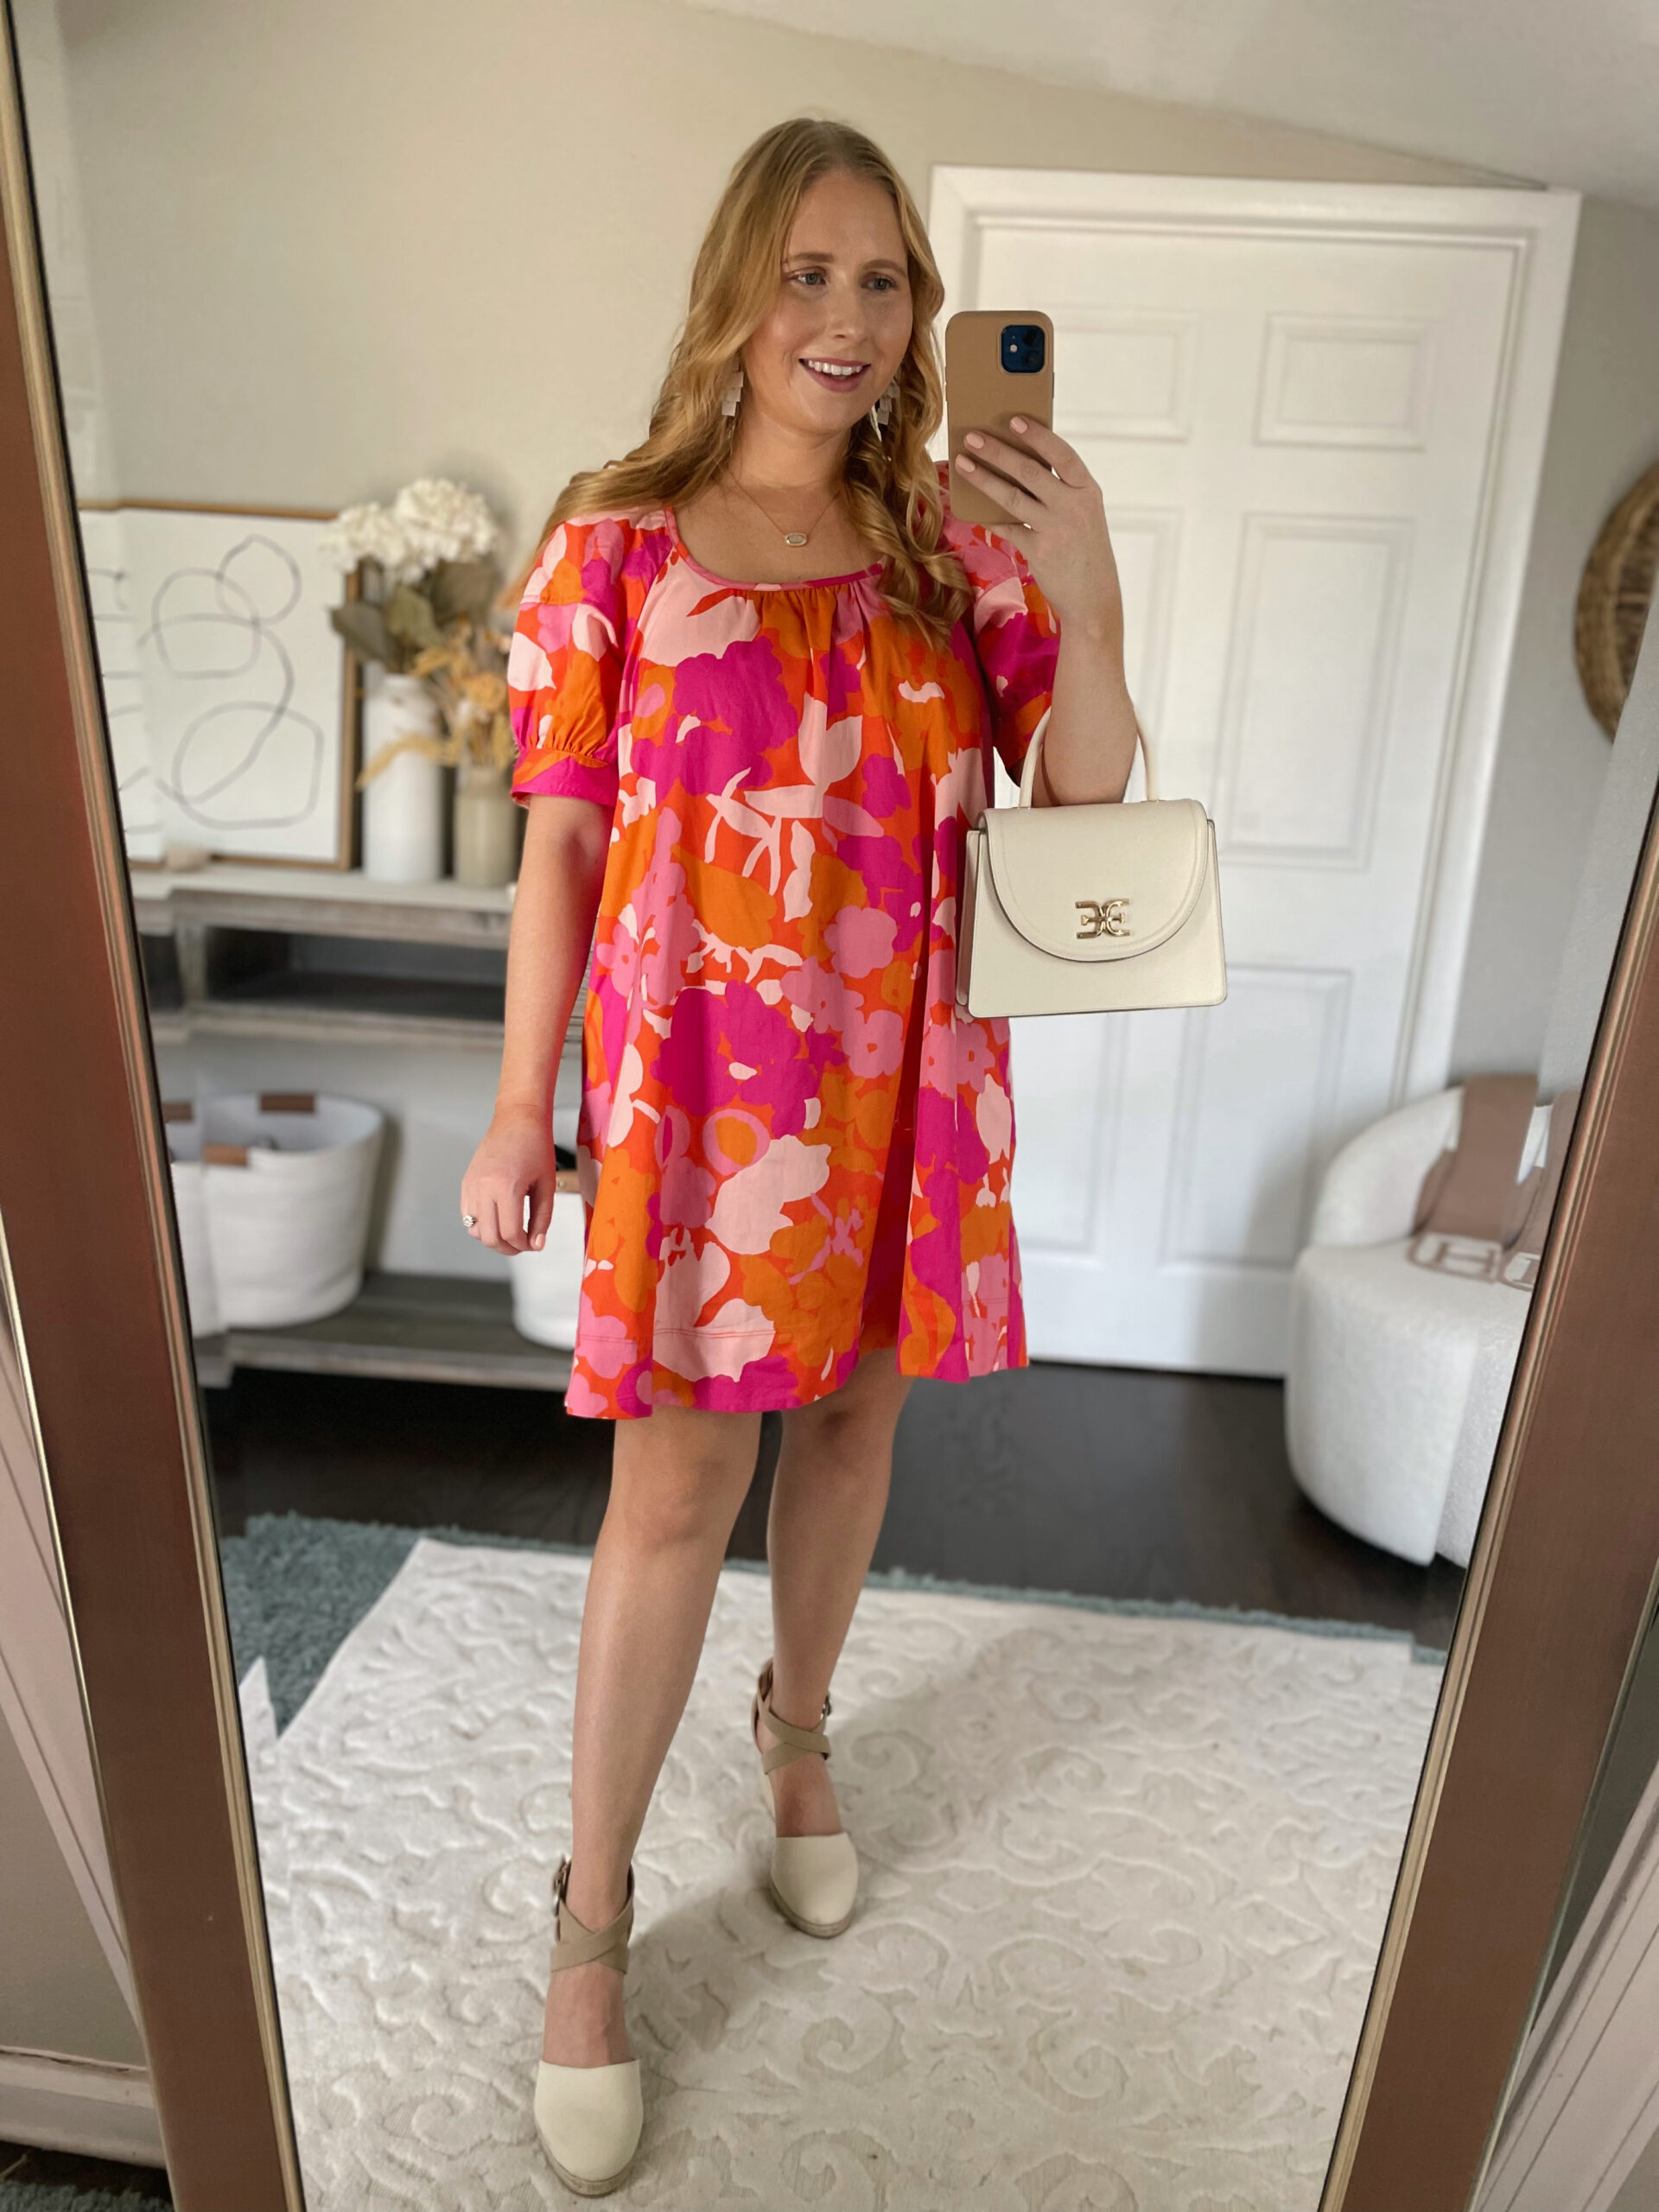 Cute Summer Dresses Under $100 - Affordable by Amanda